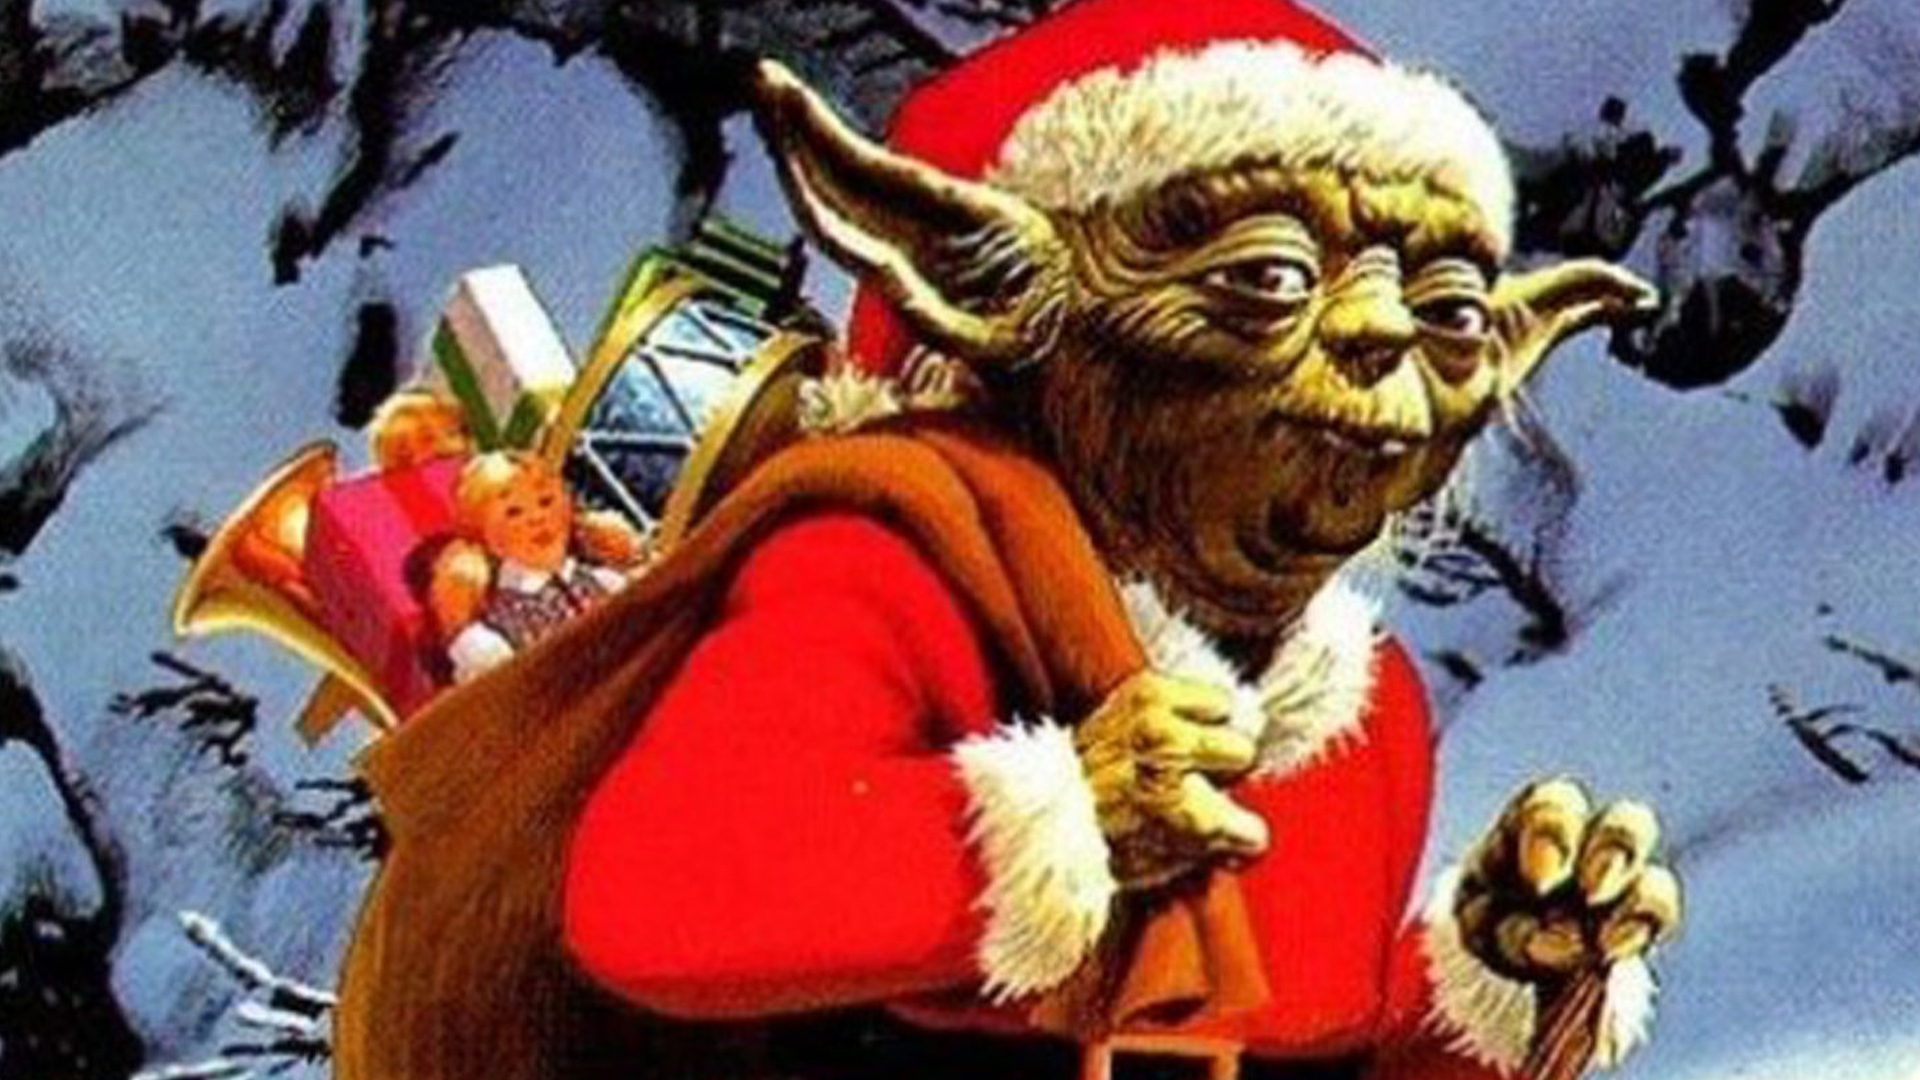 Yoda dressed as Santa Claus